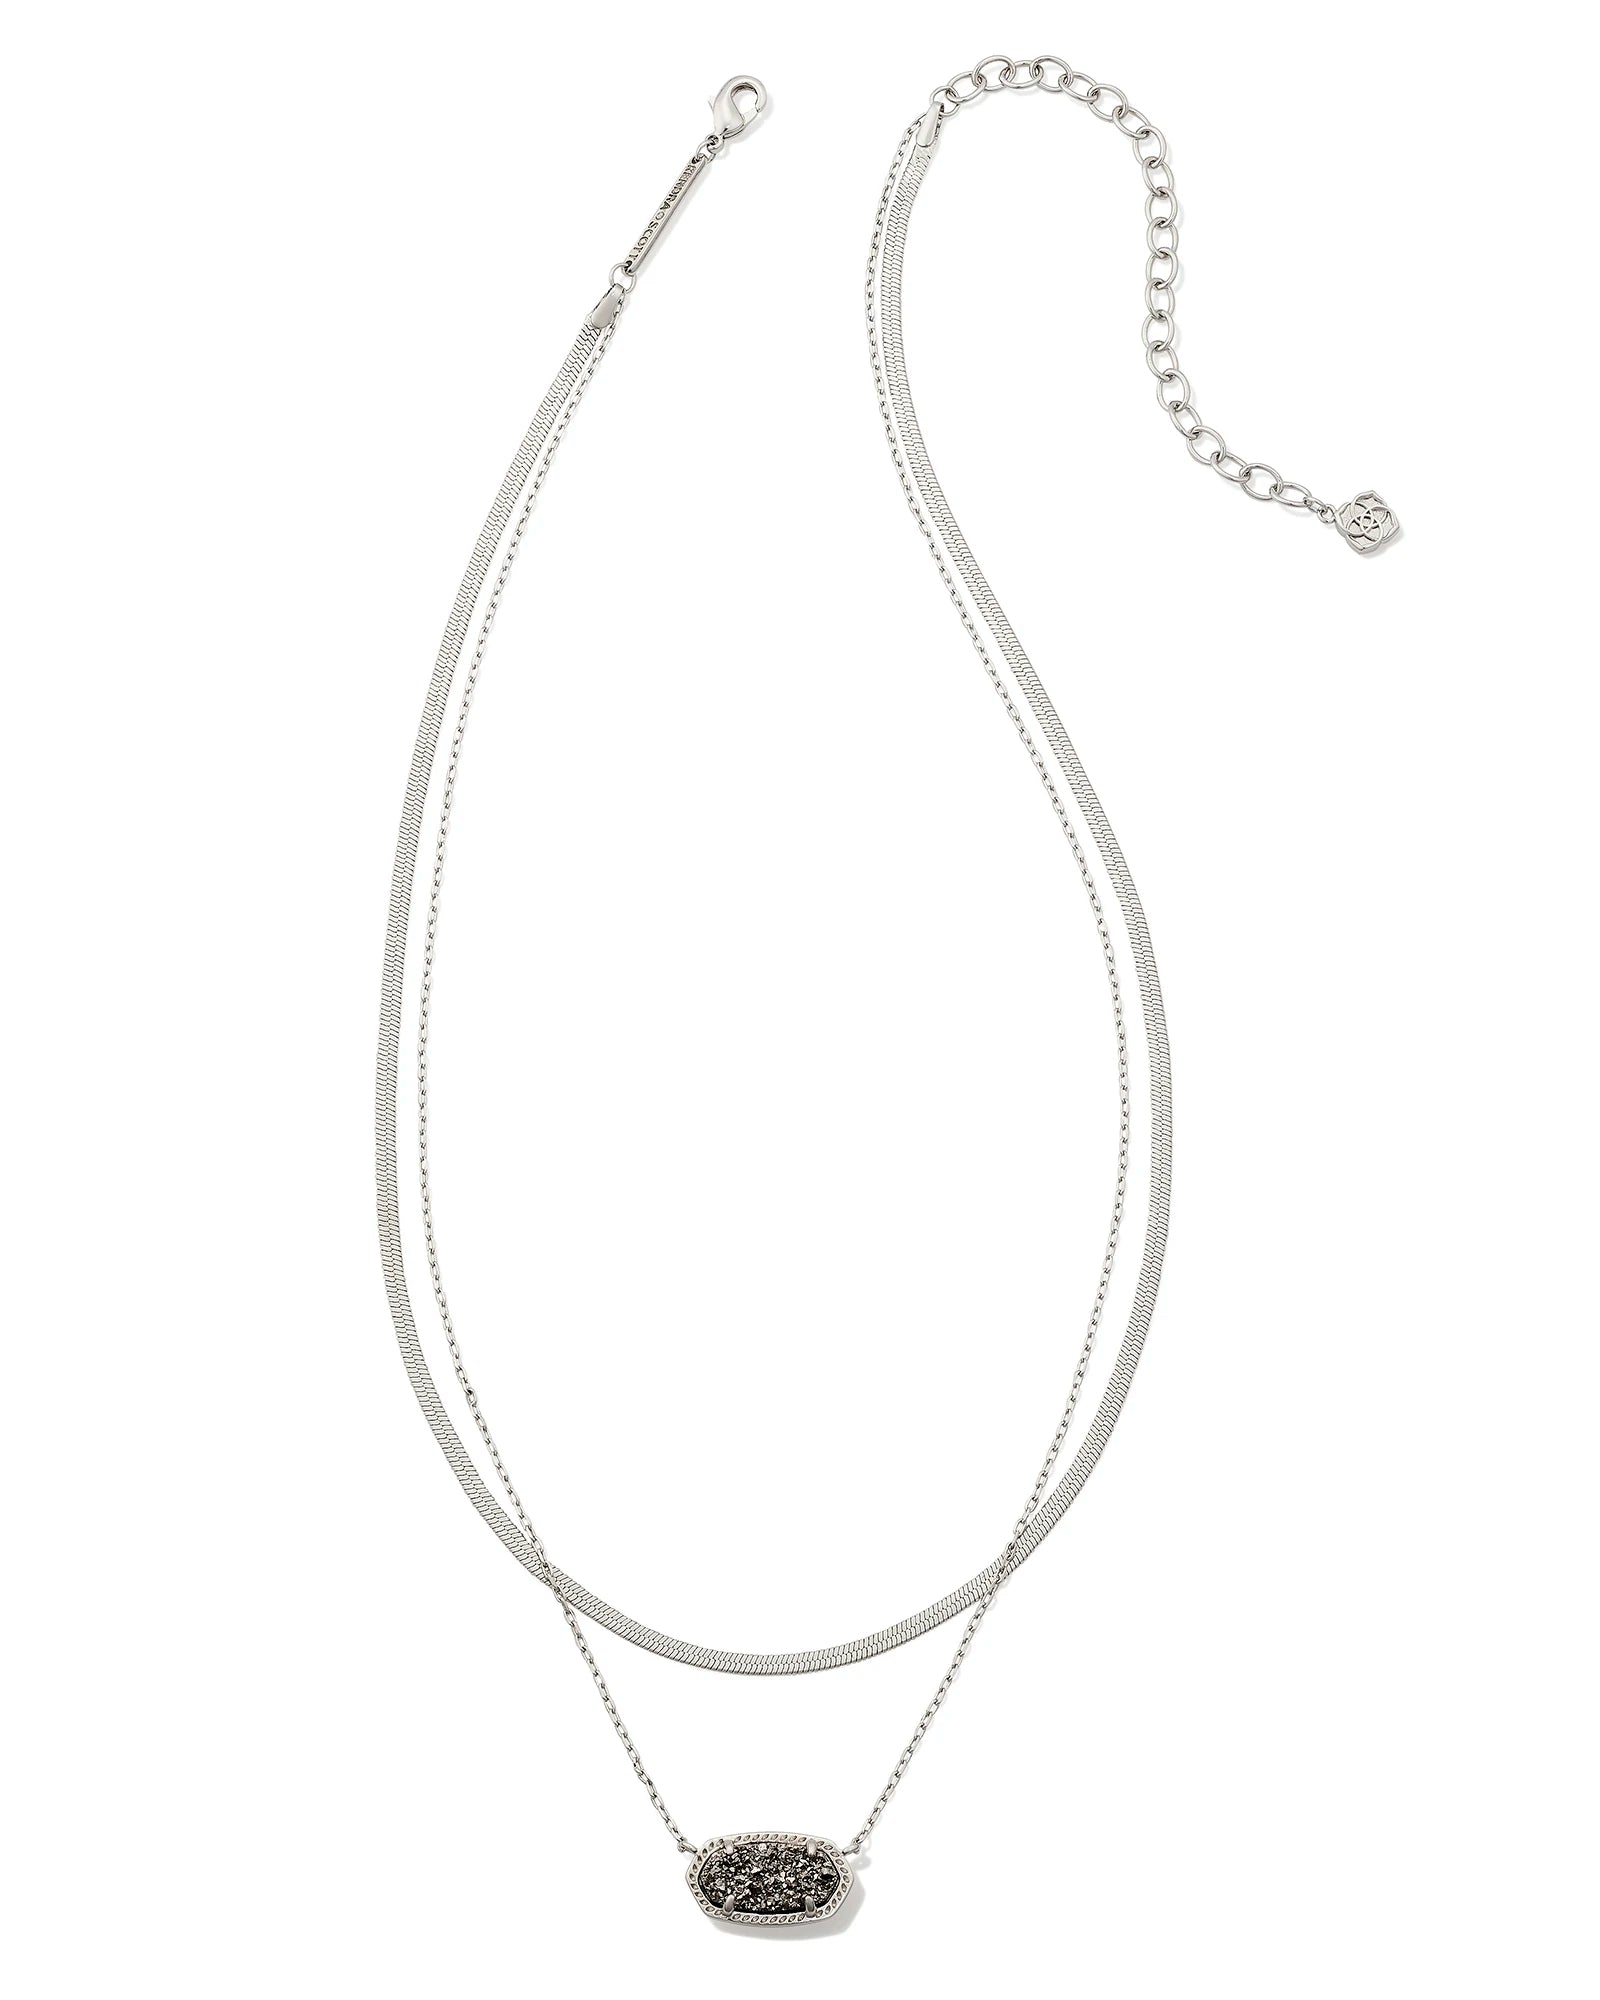 Kendra Scott | Elisa Herringbone Silver Multi Strand Necklace in Platinum Drusy - Giddy Up Glamour Boutique